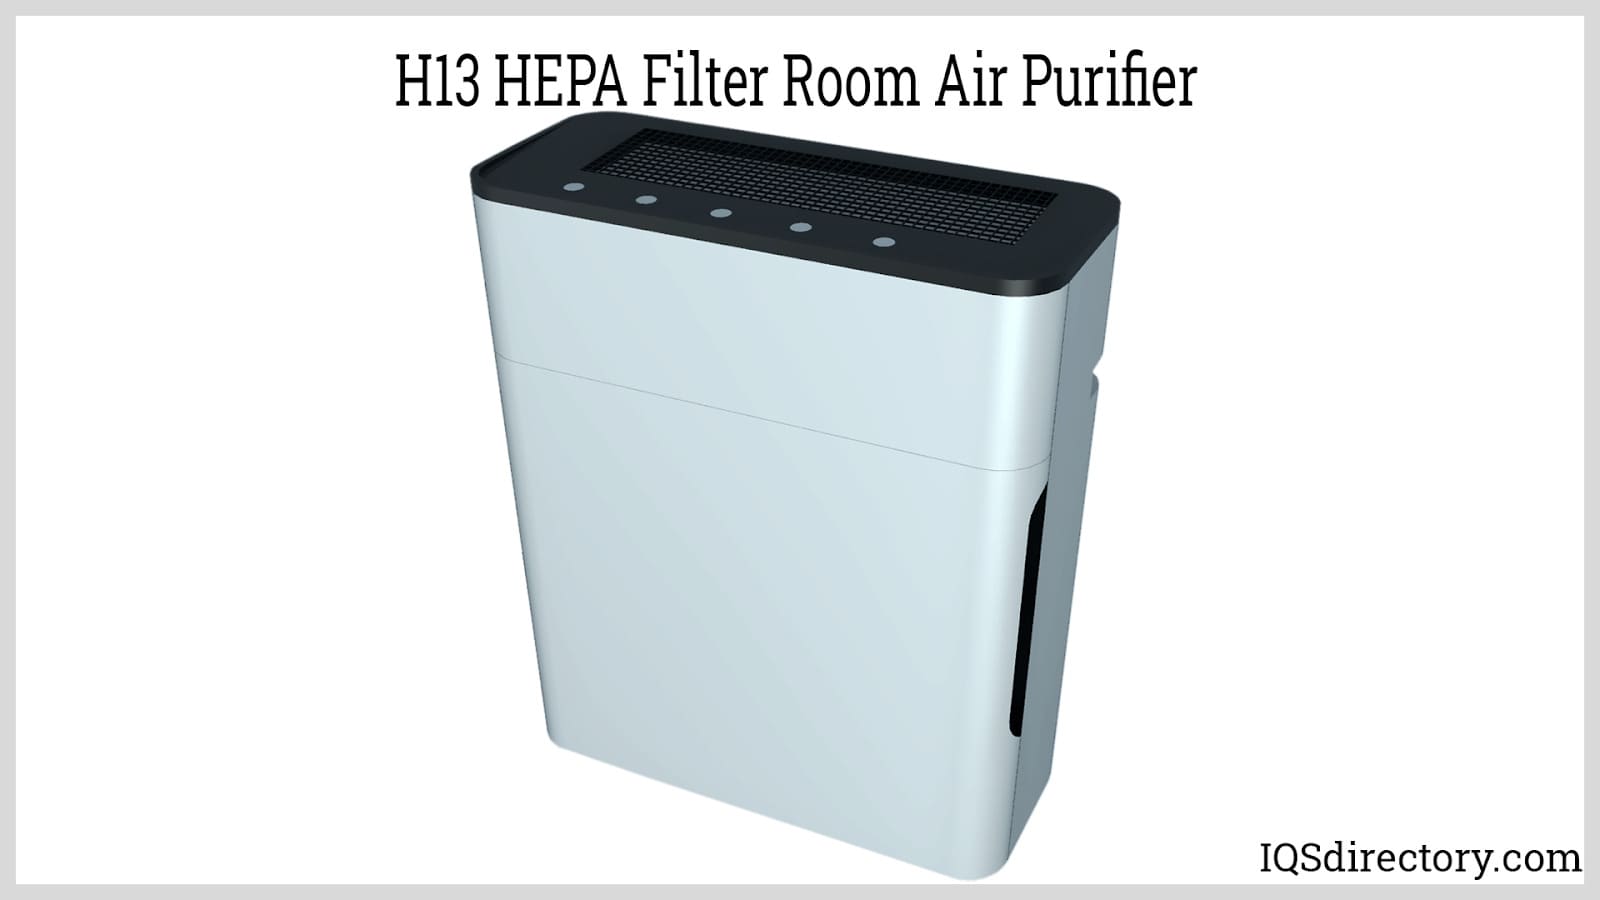 H13 HEPA Filter Room Air Purifier